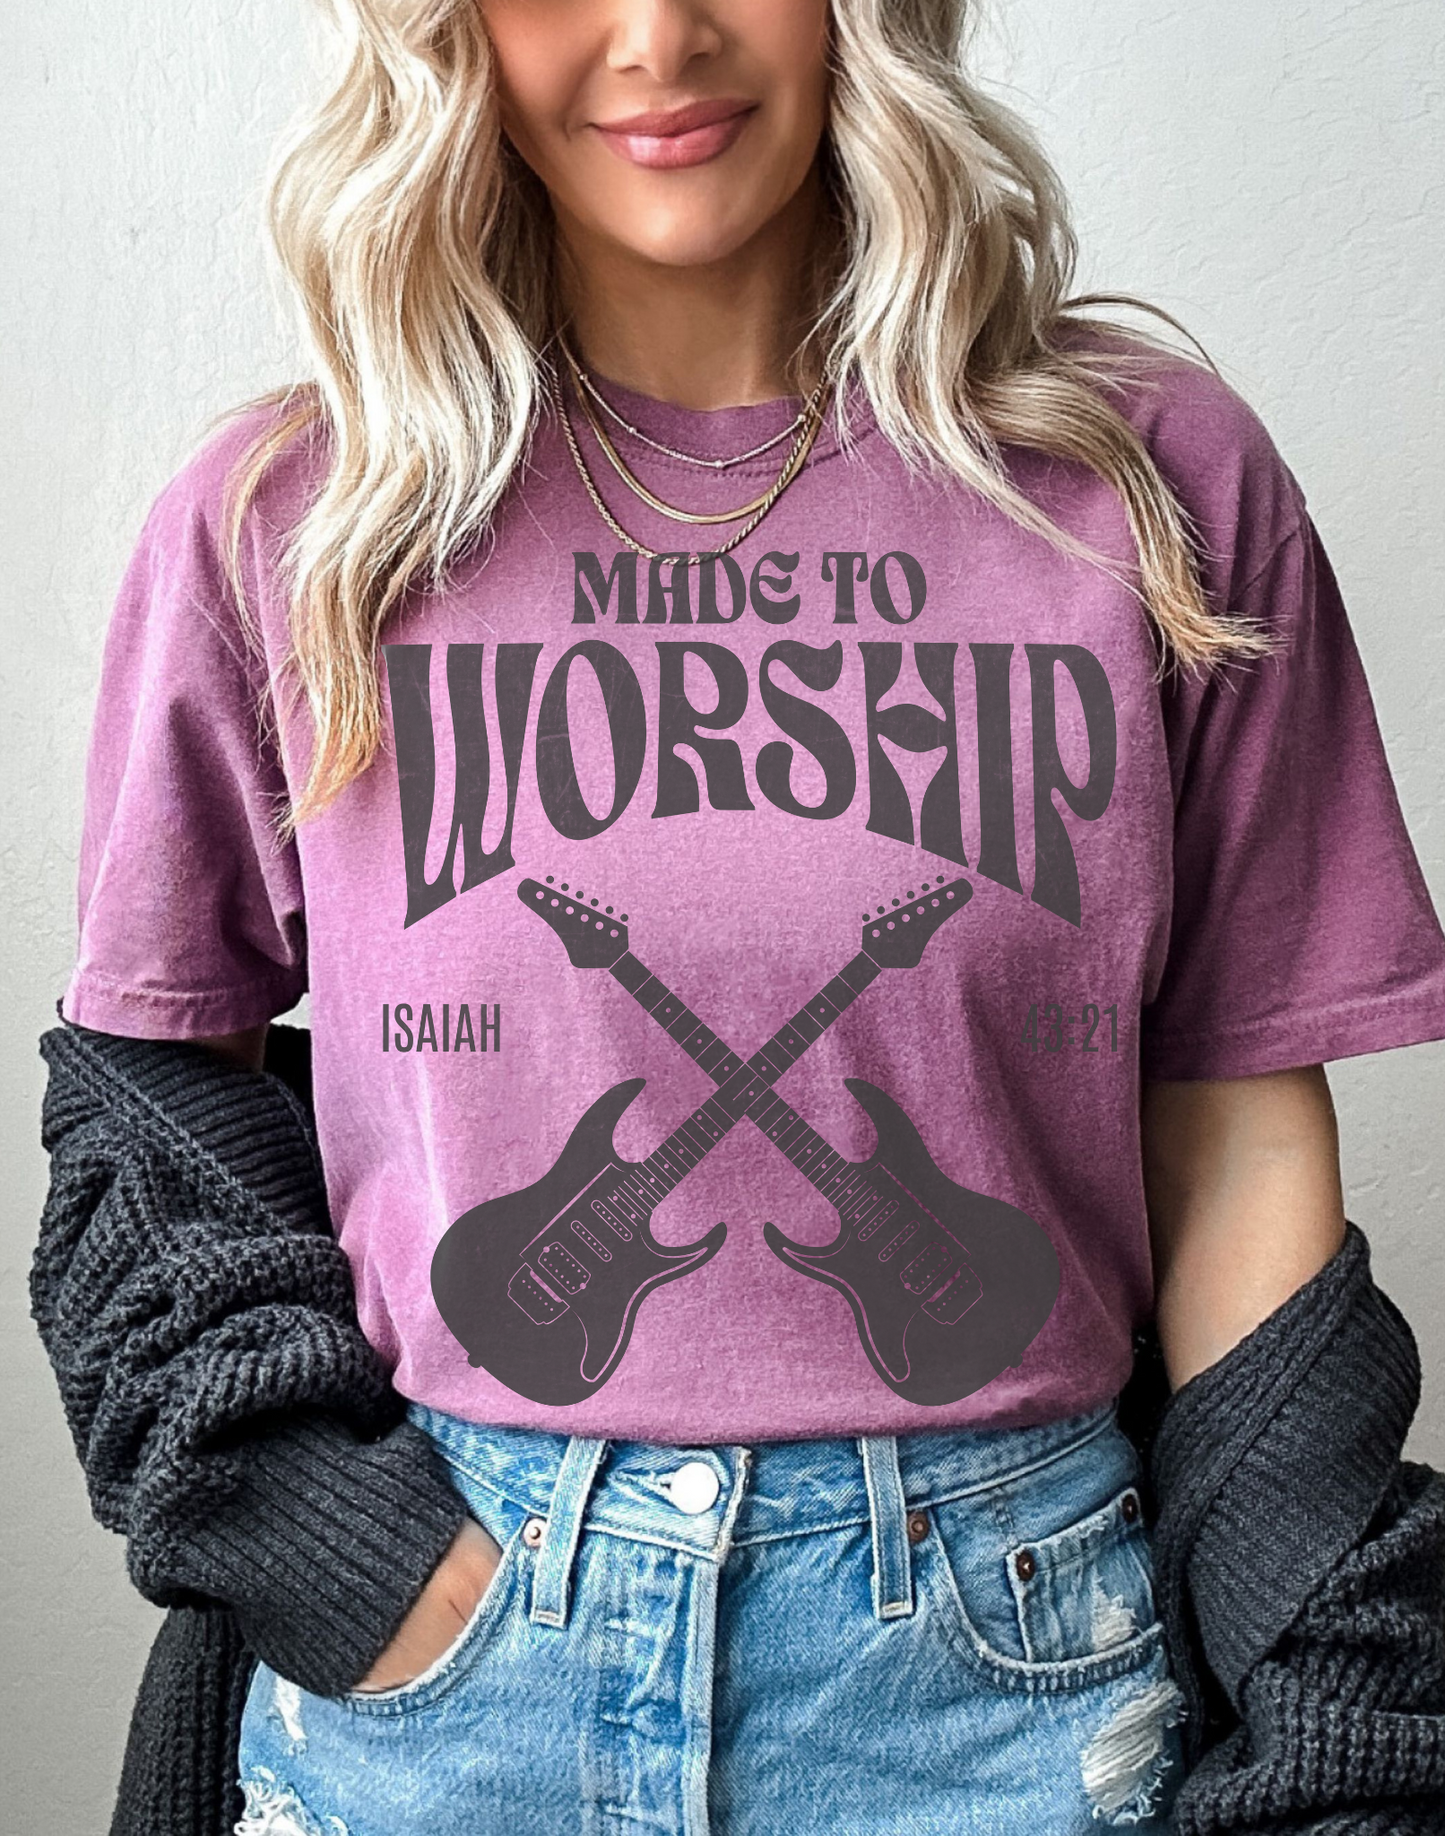 Made To Worship Christian Merch Comfort Colors Praise Team Worship Leader Gift, Christian Music Tee Isaiah 43:21 Unisex Garment-Dyed T-shirt